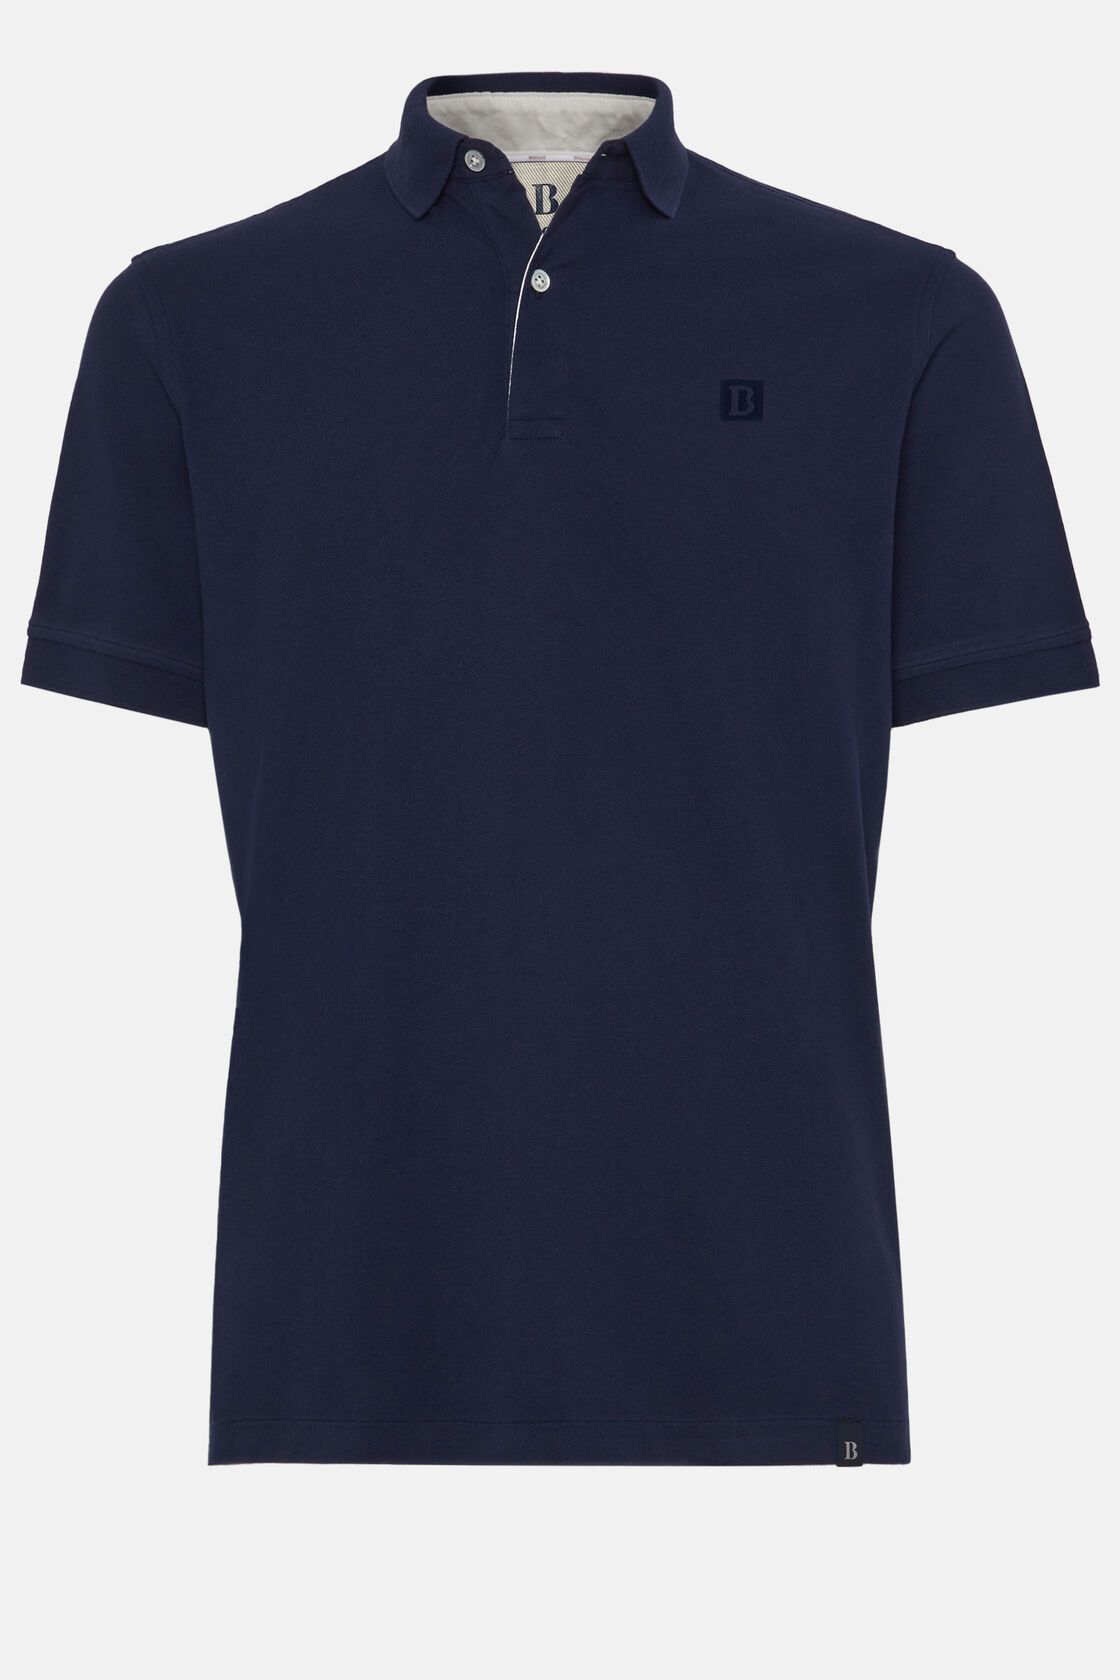 Regular Fit Cotton Pique Polo Shirt, Navy blue, hi-res